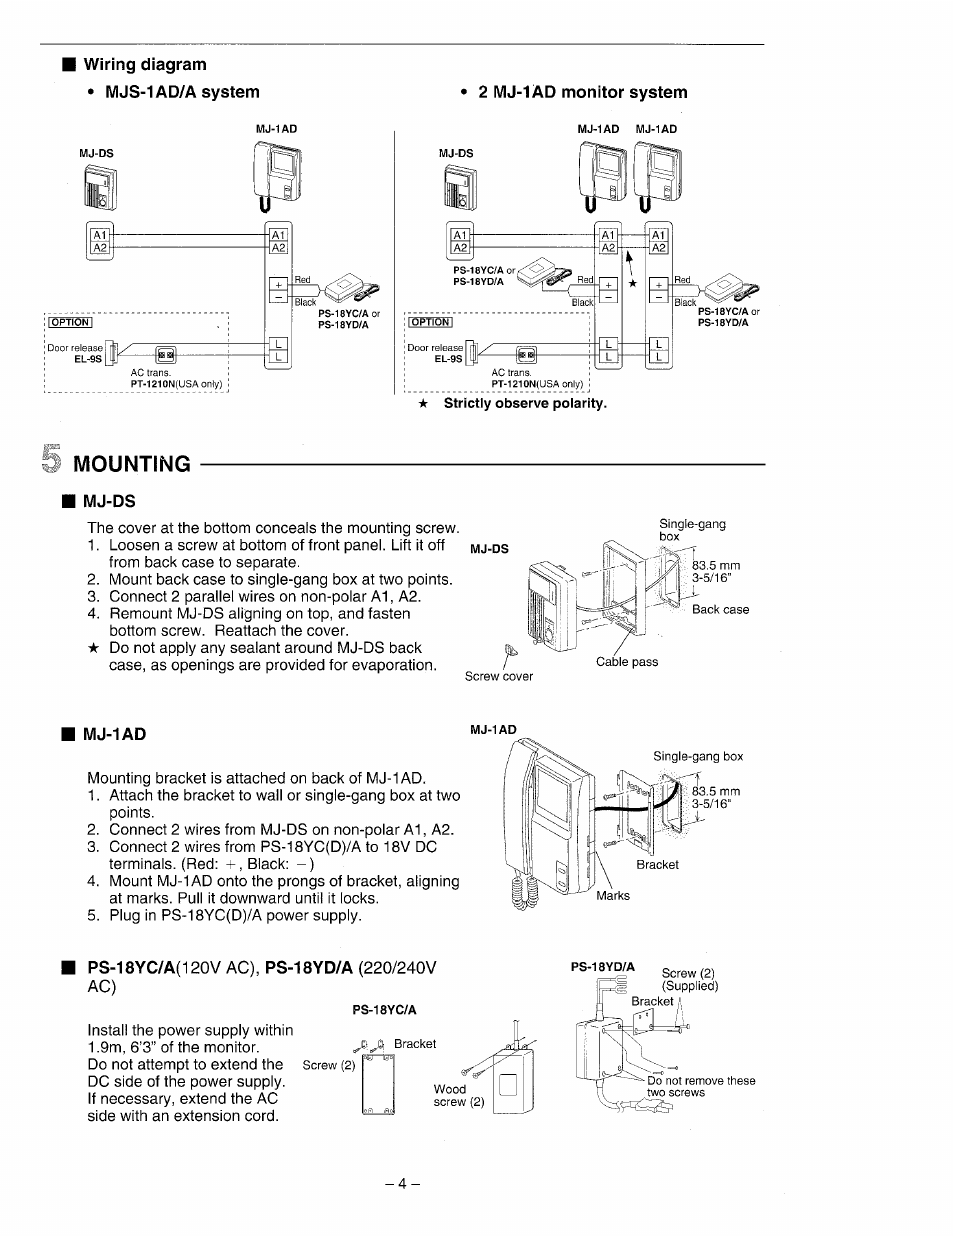 Wiring Diagram  U2022 Mjs A System  Mounting  Mj